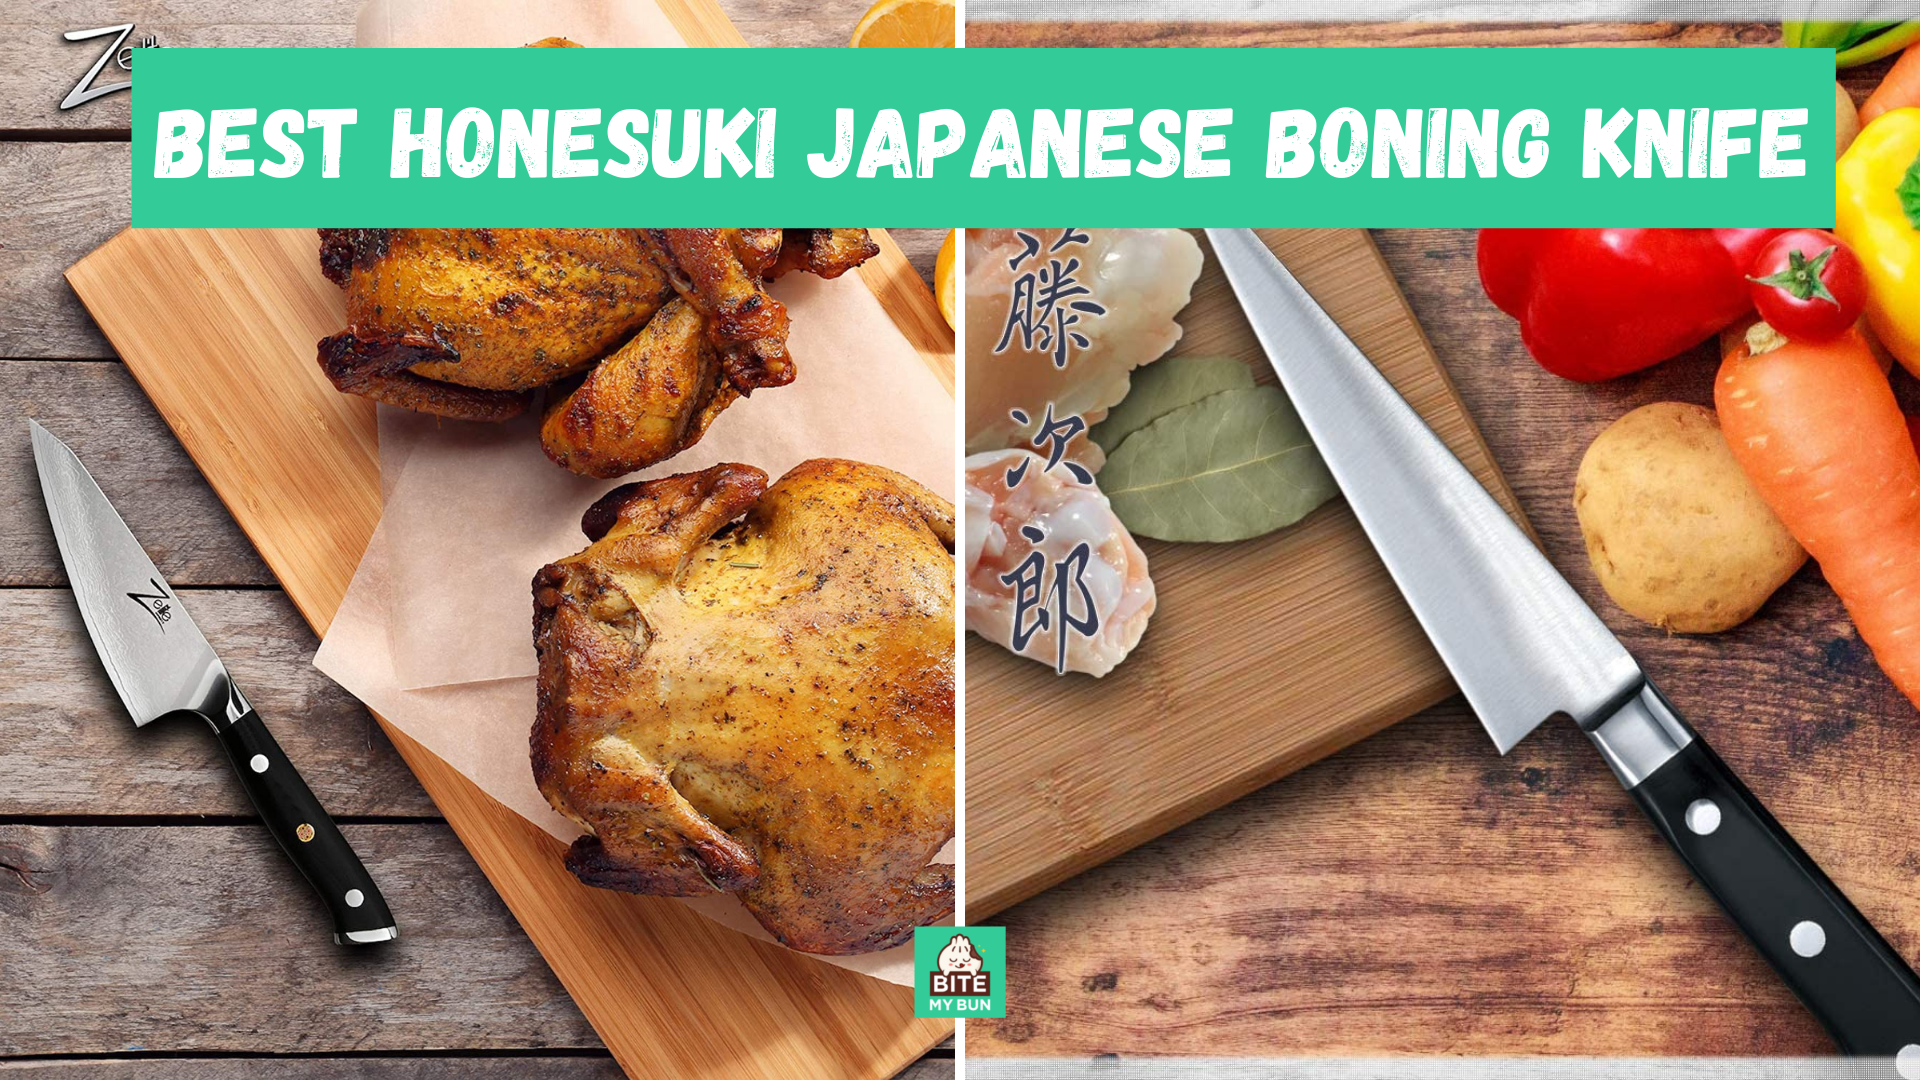 Best Honesuki Japanese boning knife | Find your absolute favorite